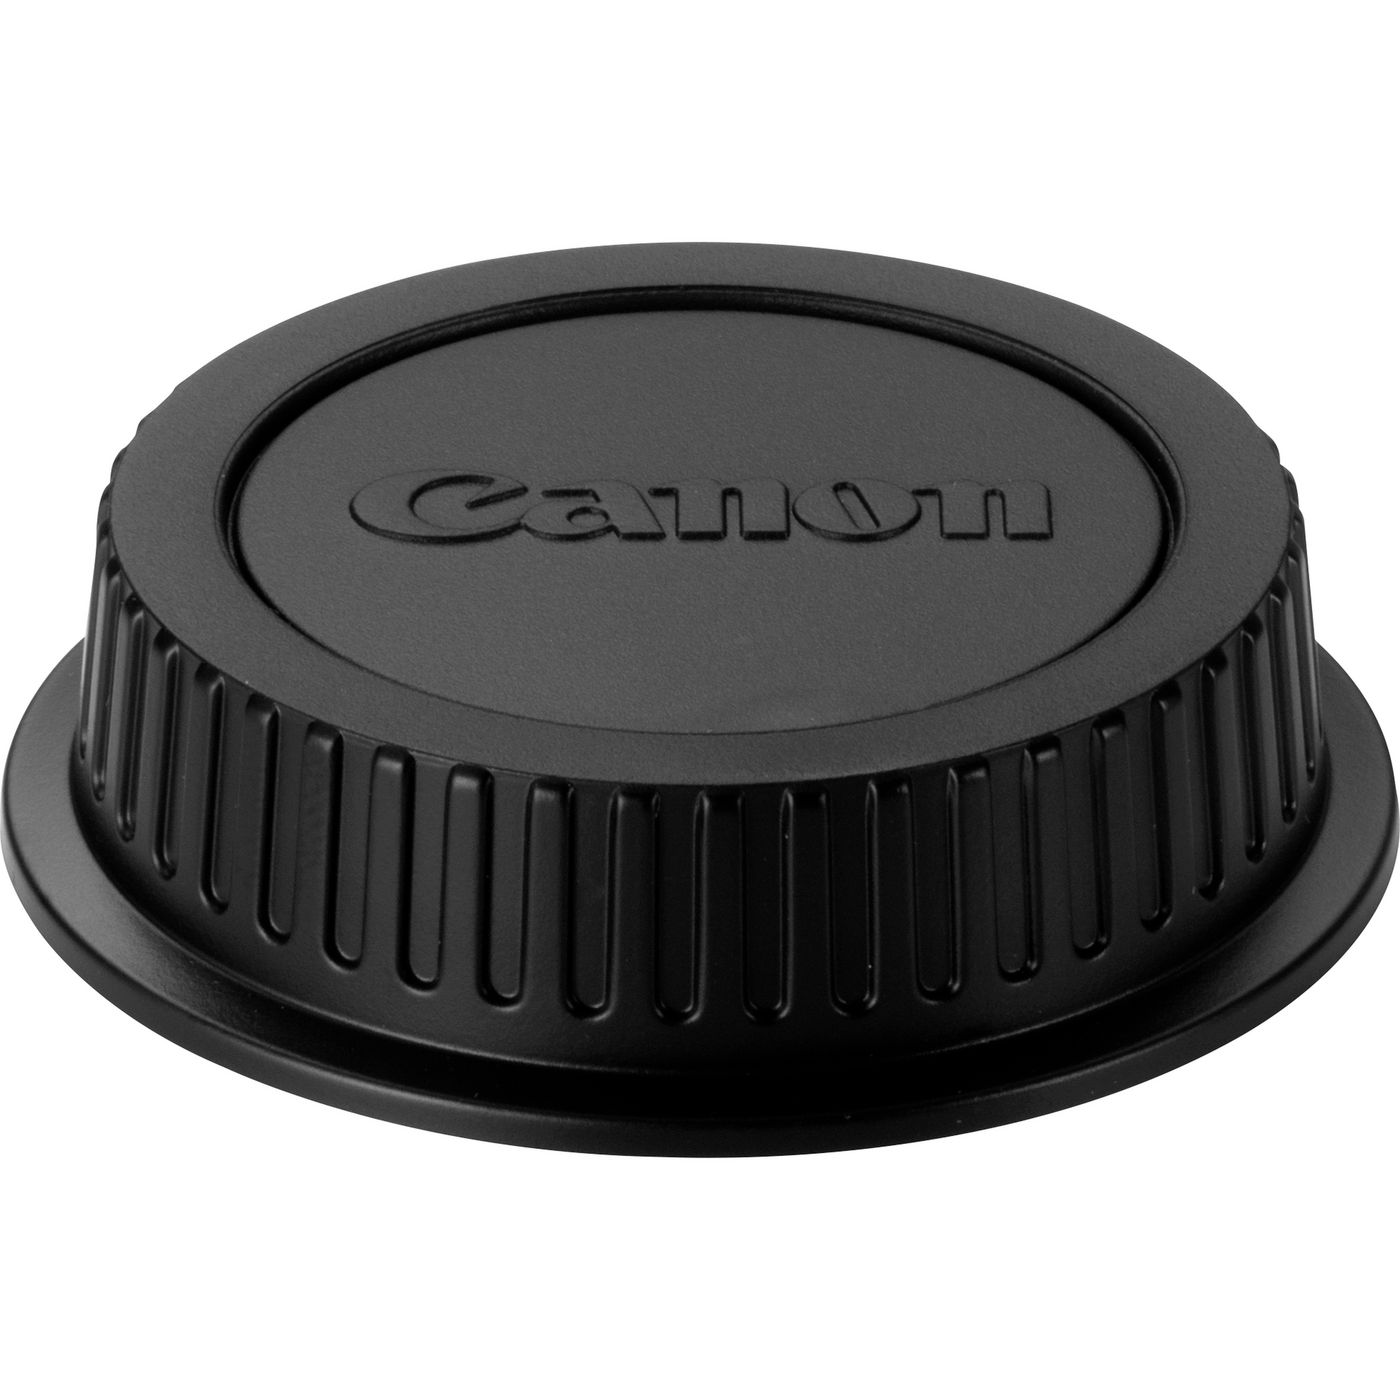 Canon 2723A001 Lens cap dust cap E 